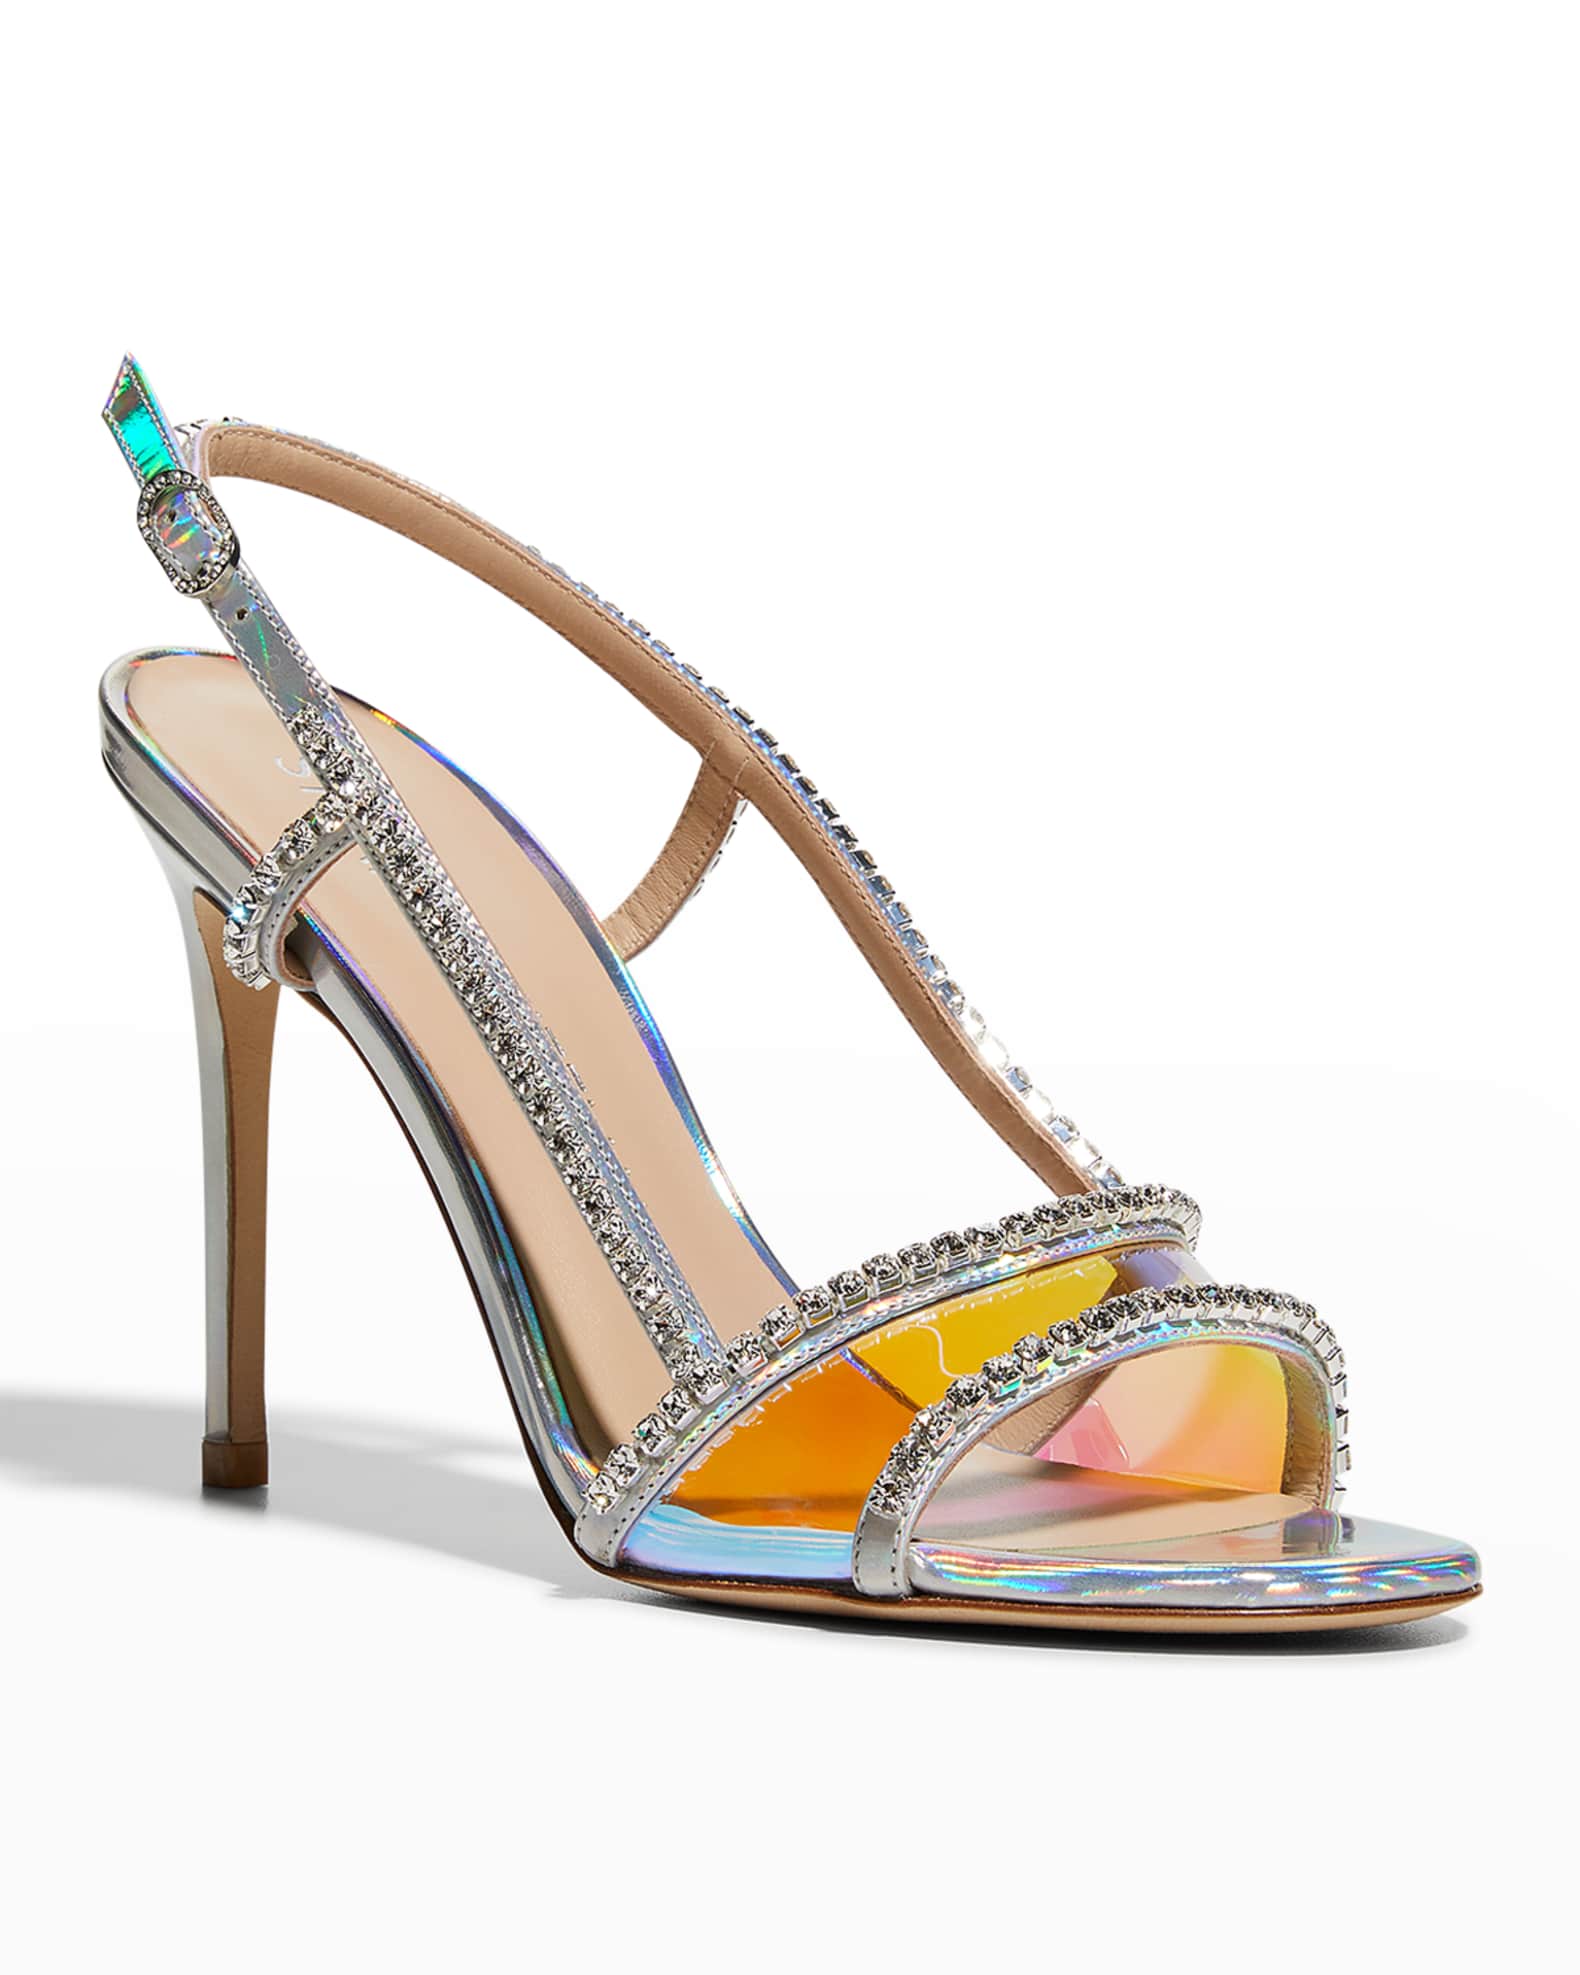 Stuart Weitzman Mondrian Embellished Metallic Glam Sandals | Neiman Marcus